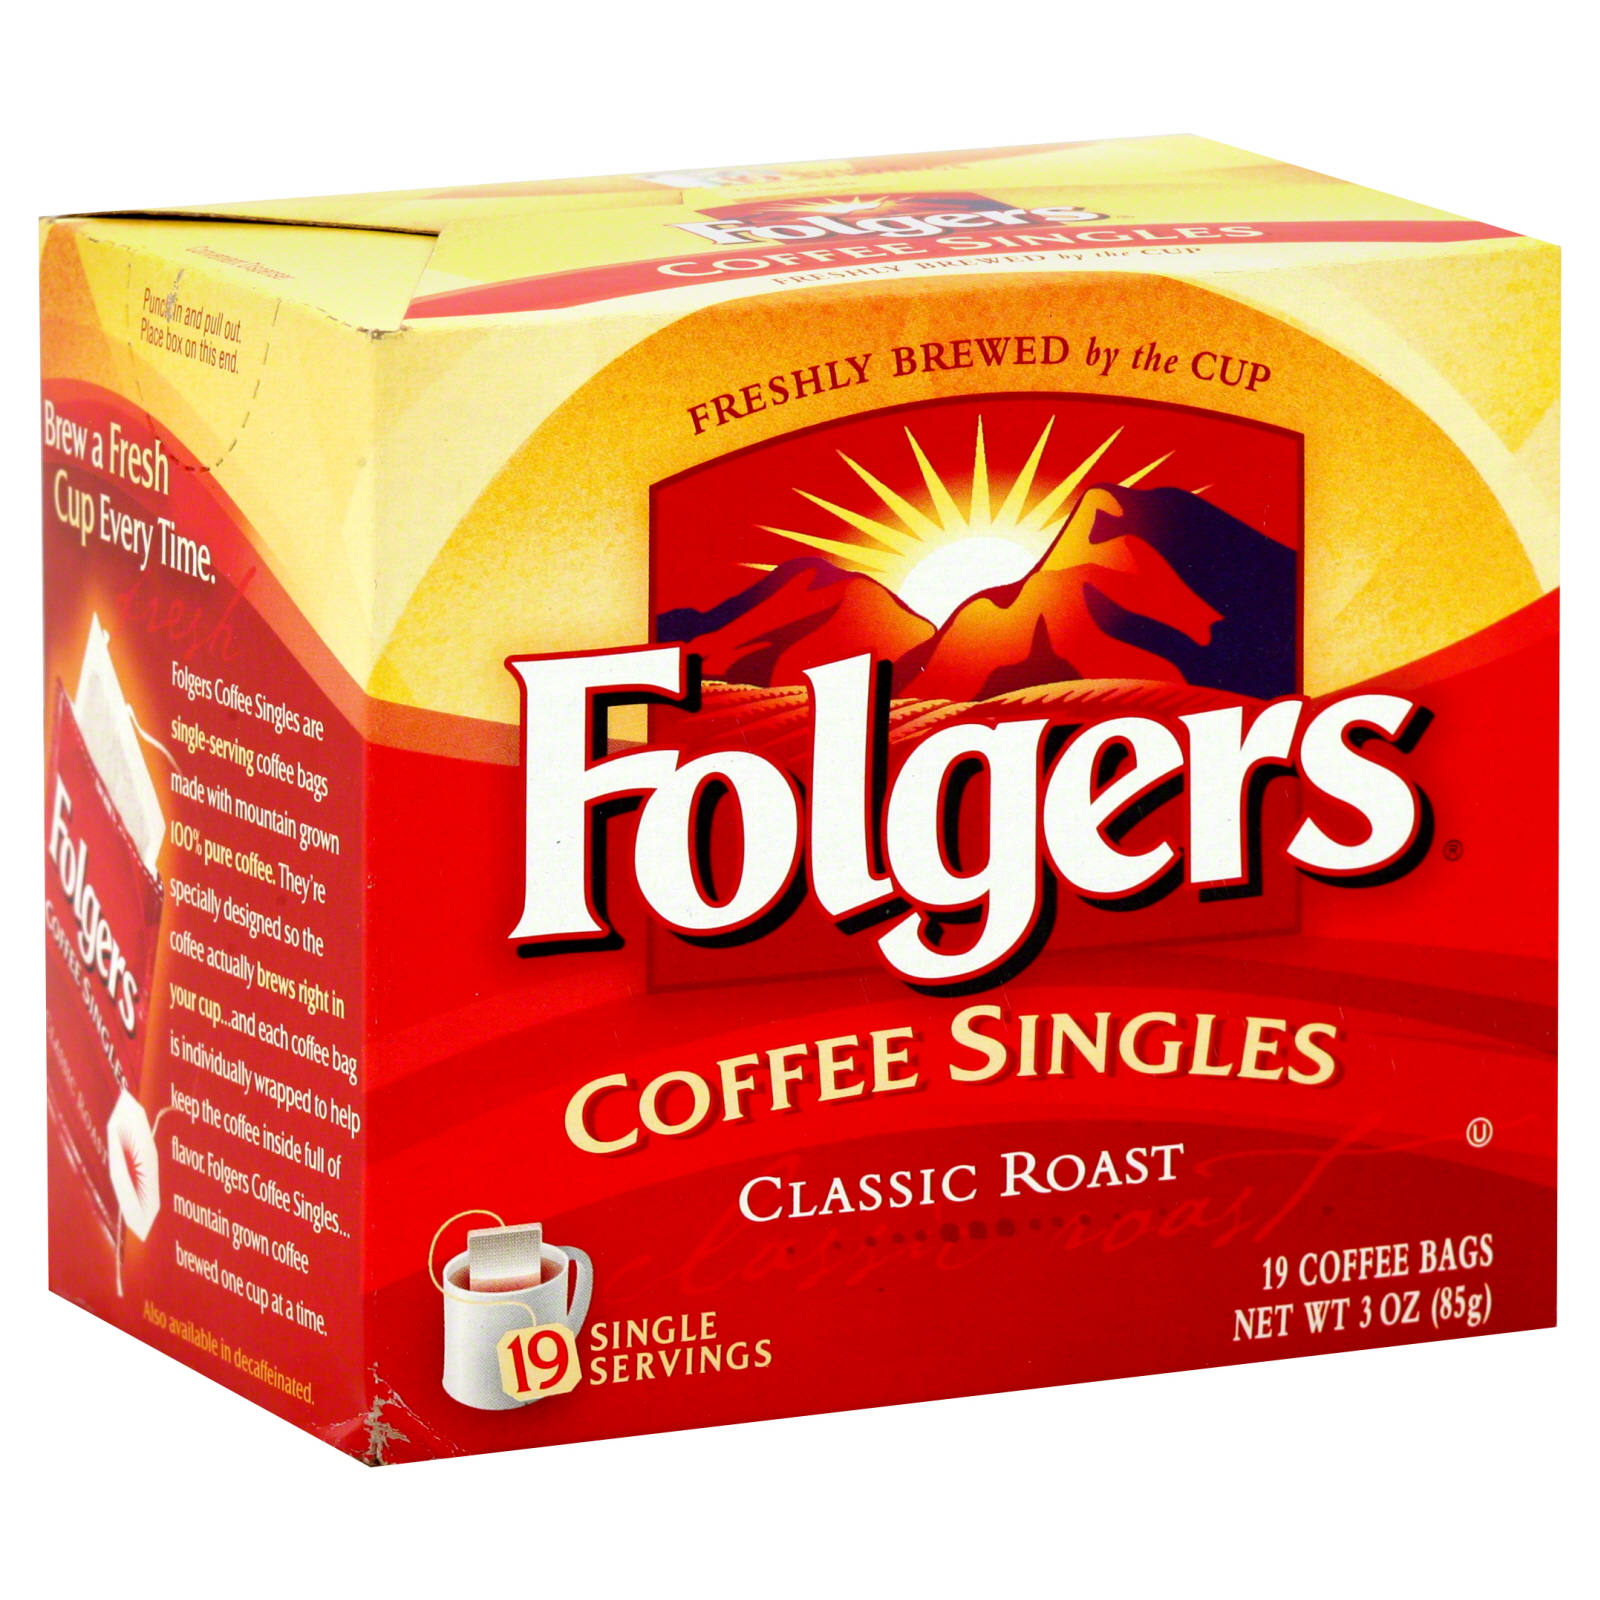 Folgers Coffee Singles, Classic Roast, 19 coffee bags [3 oz (85 g)]